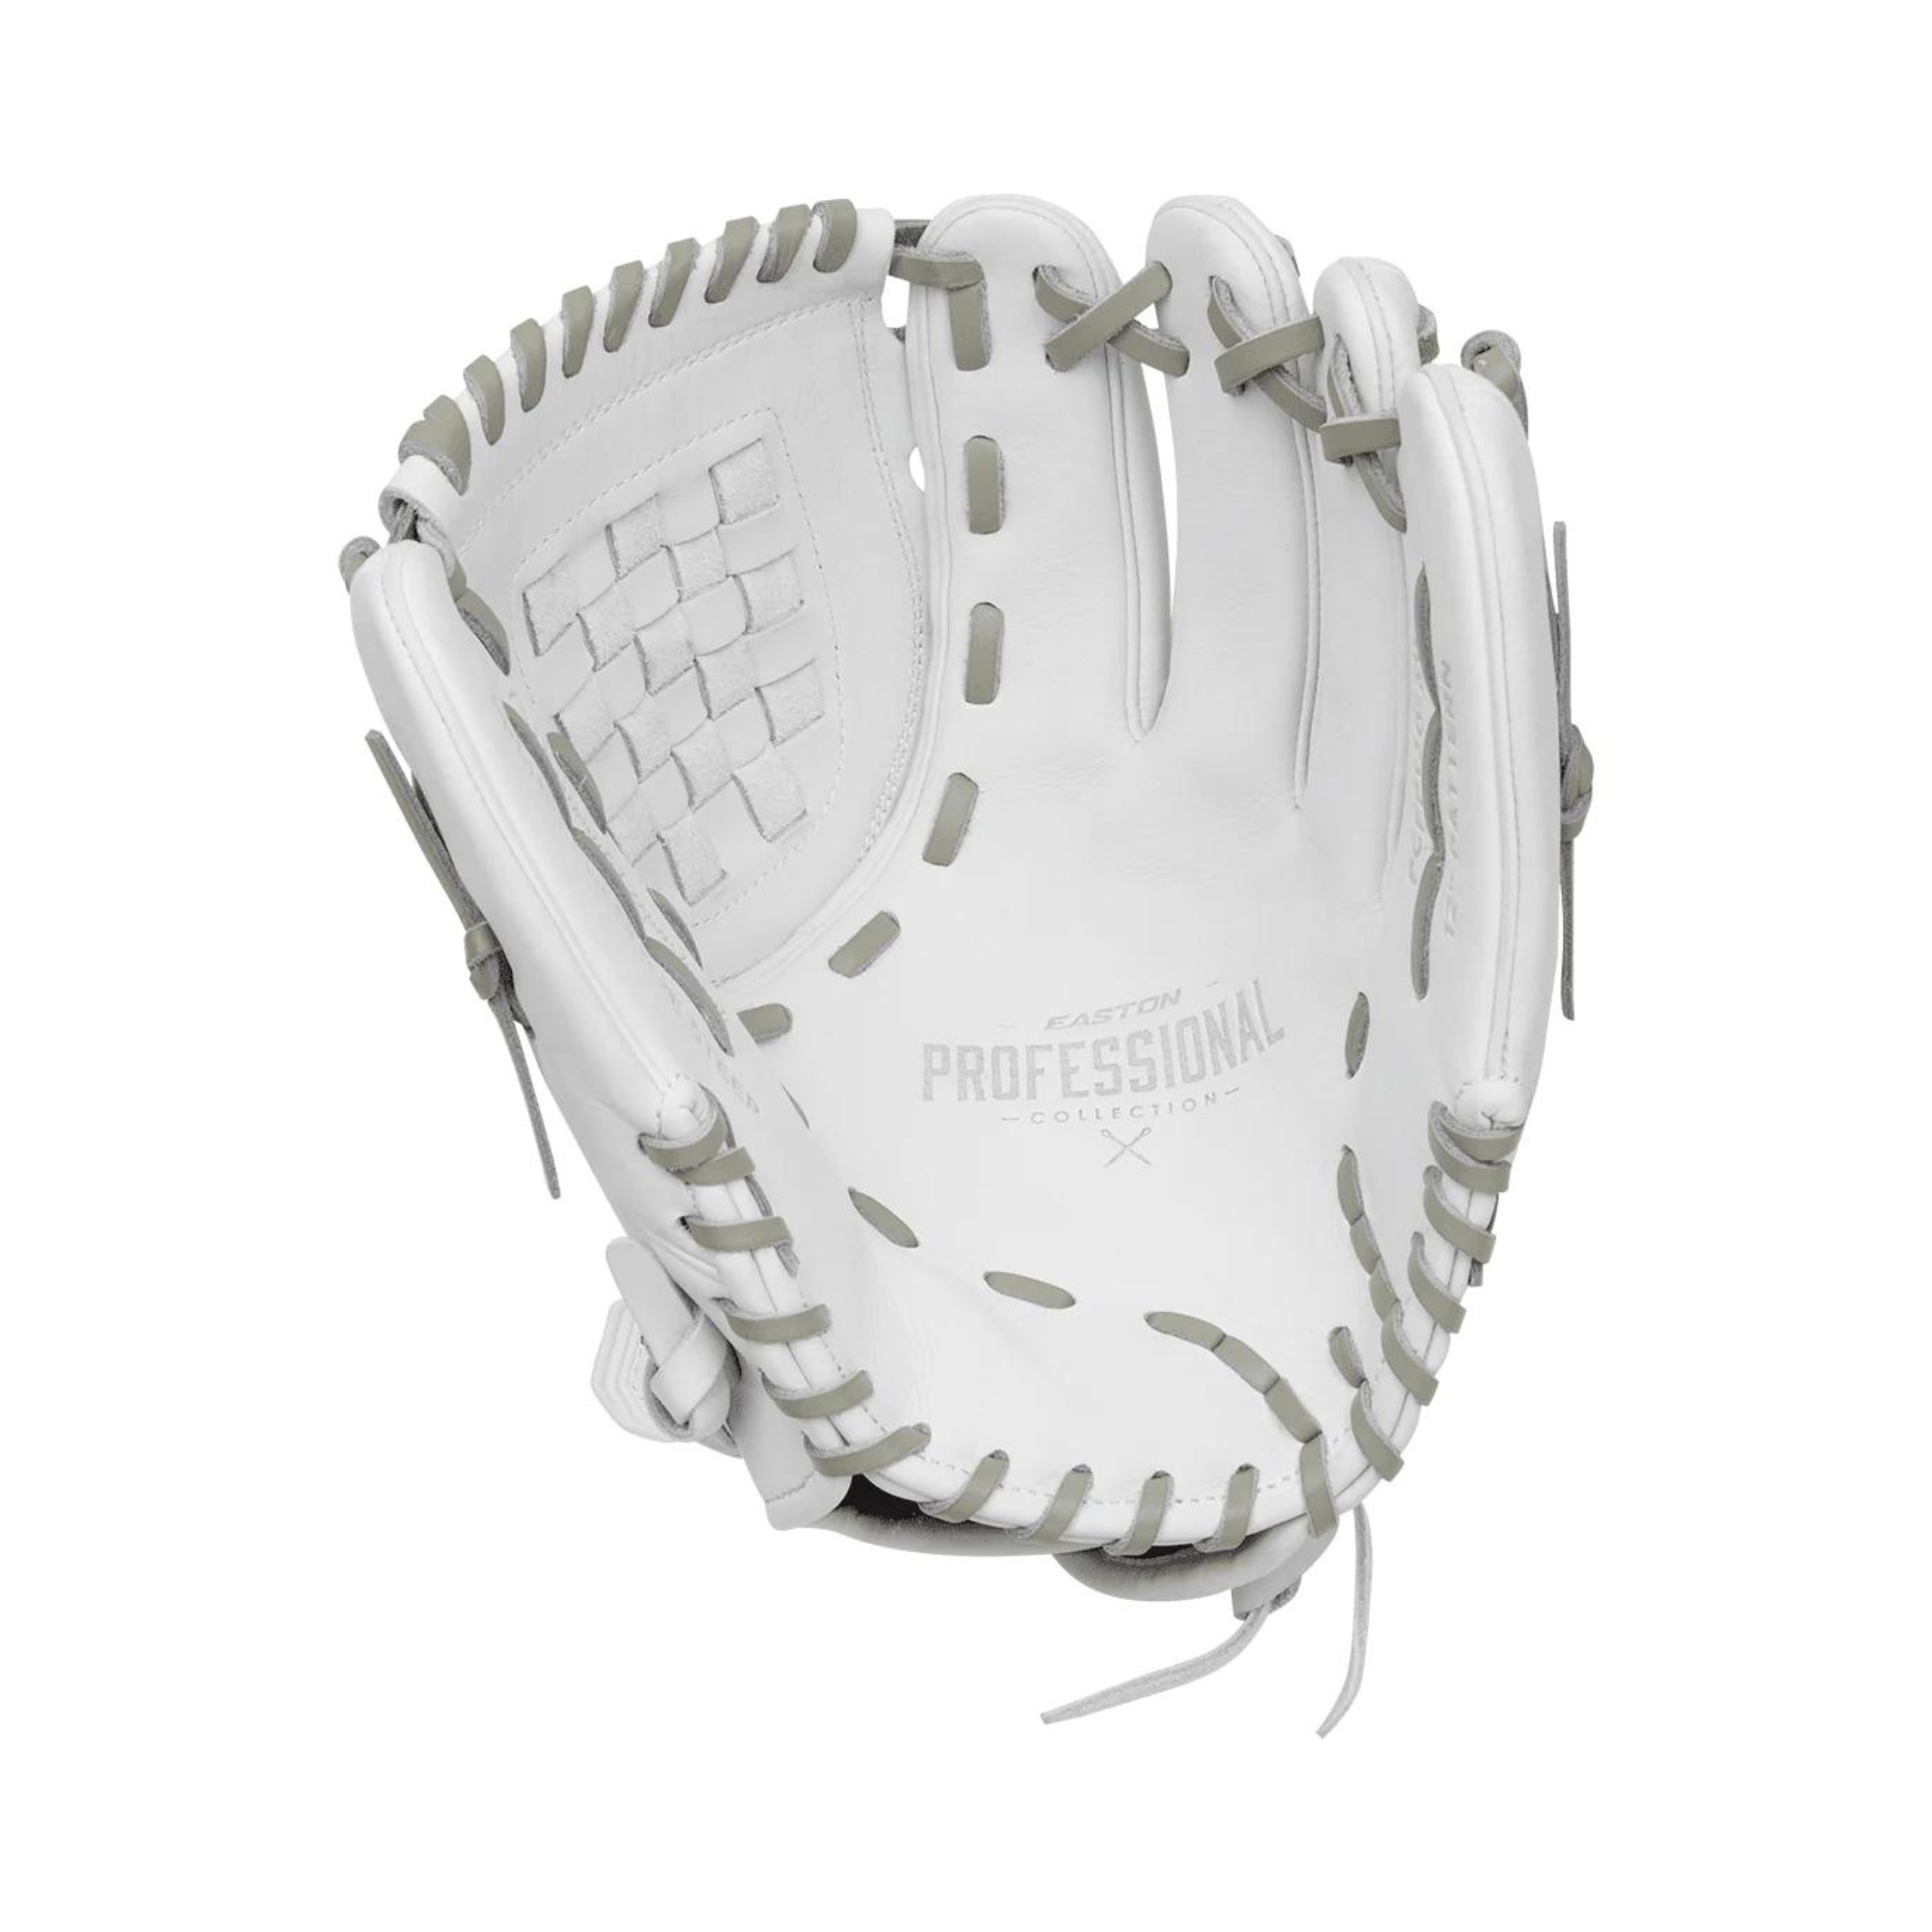 Easton Pro Collection Series Softball Glove 12" RHT